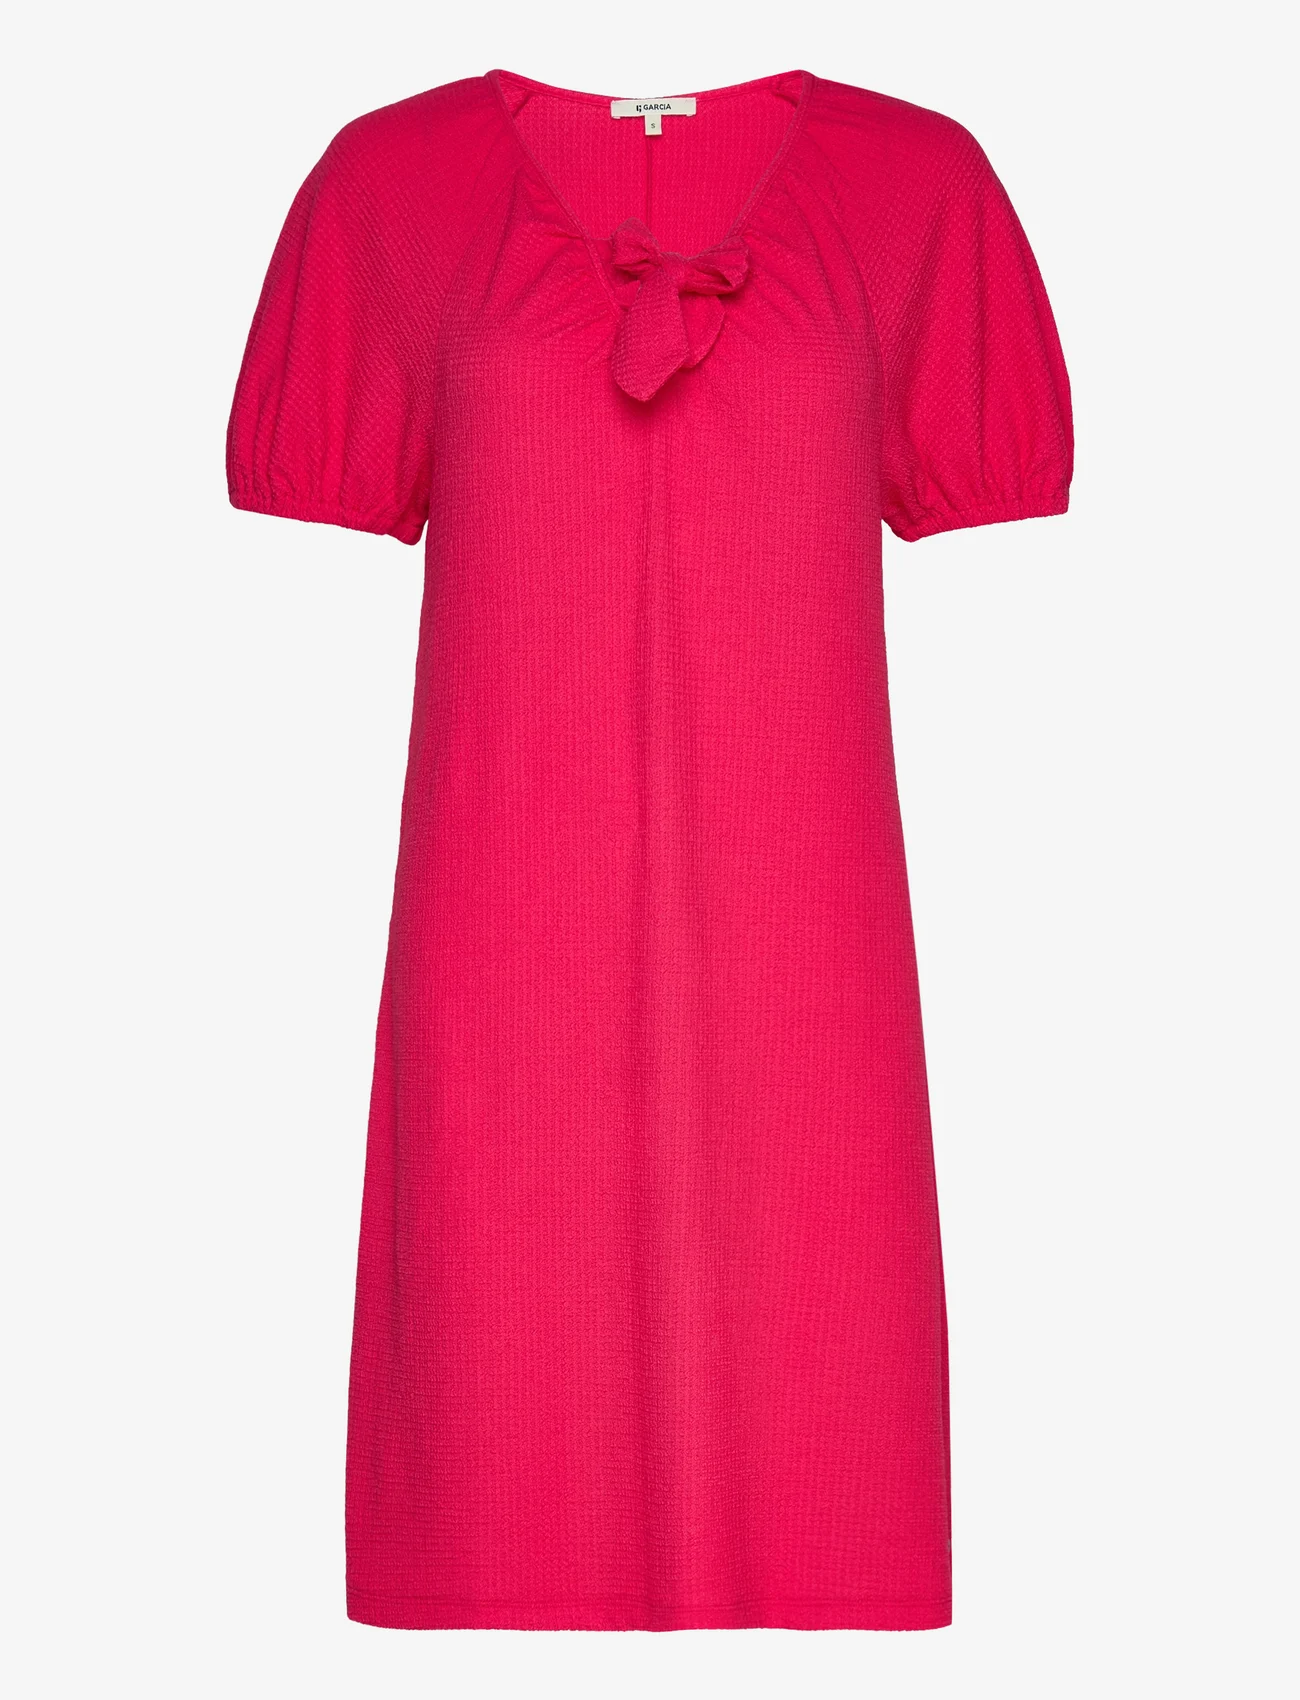 Garcia - ladies dress - zomerjurken - rouge red - 0